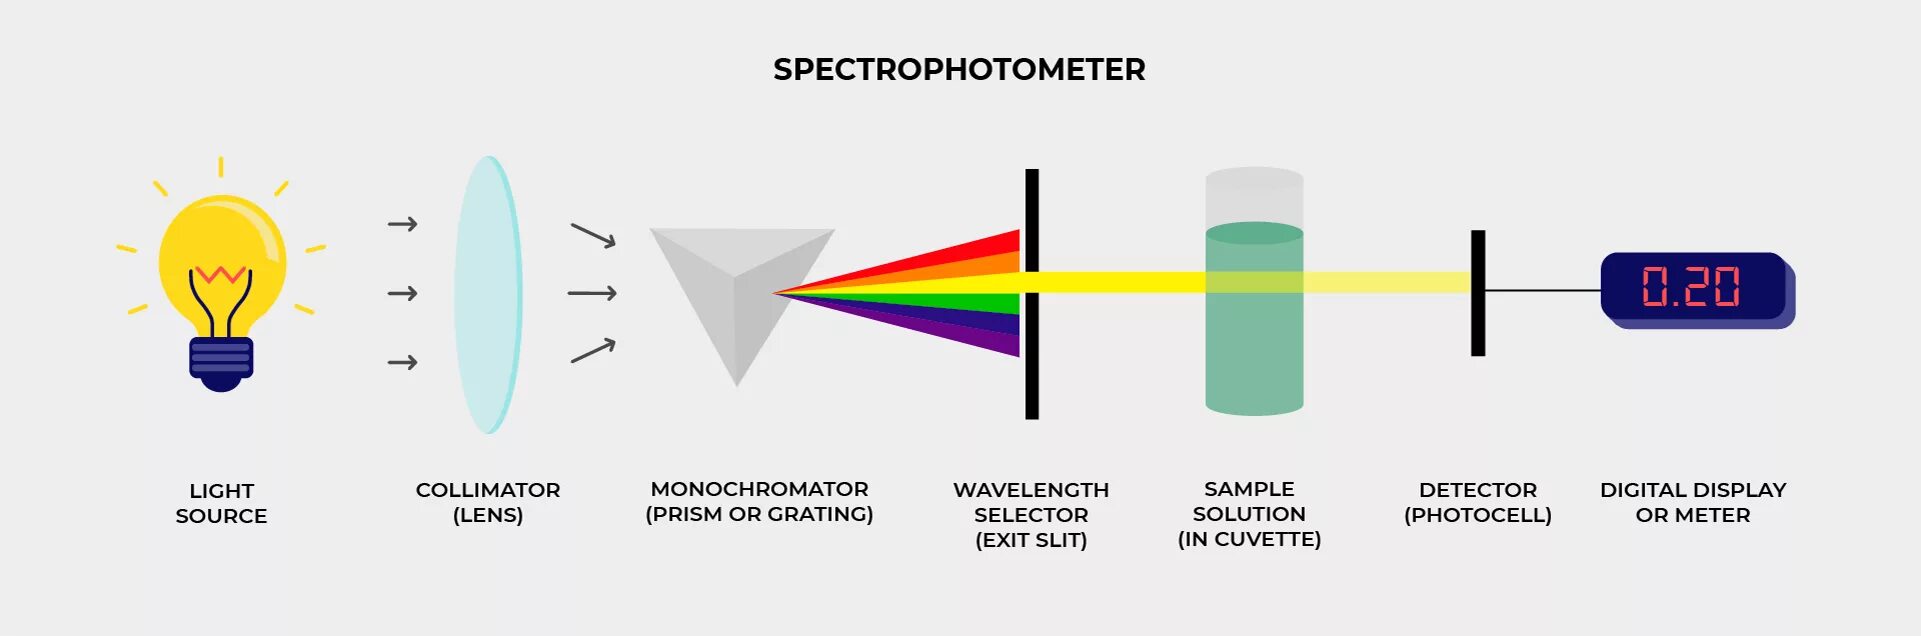 Спектрофотометр принцип работы. Спектрофотометр схема прибора. Спектрофотометр схема и принцип работы. Принципиальная схема спектрофотометра.